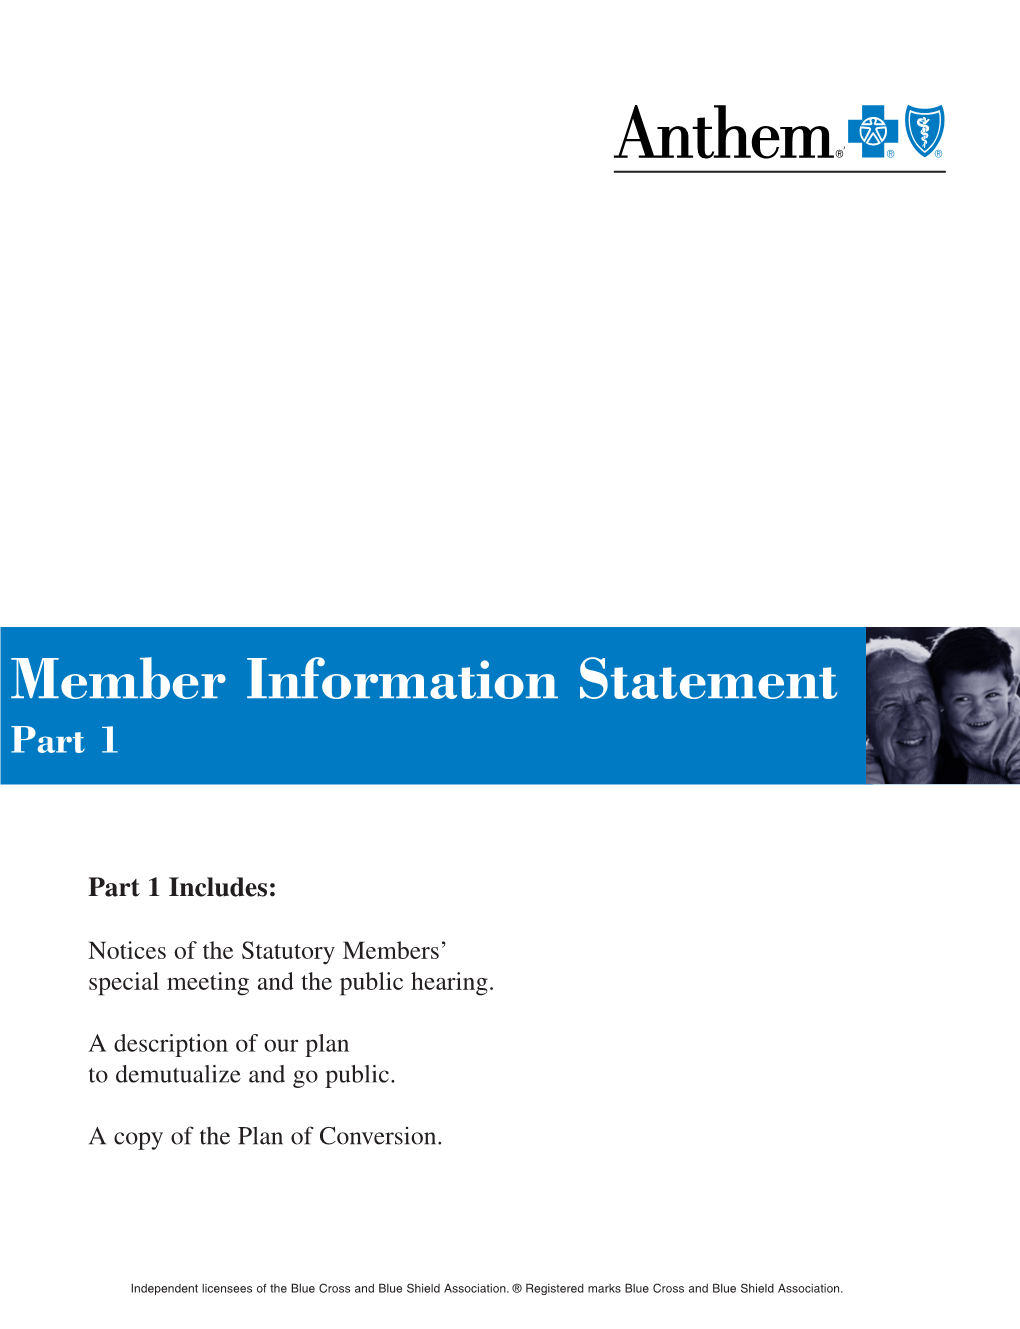 Member Information Statement Part 1